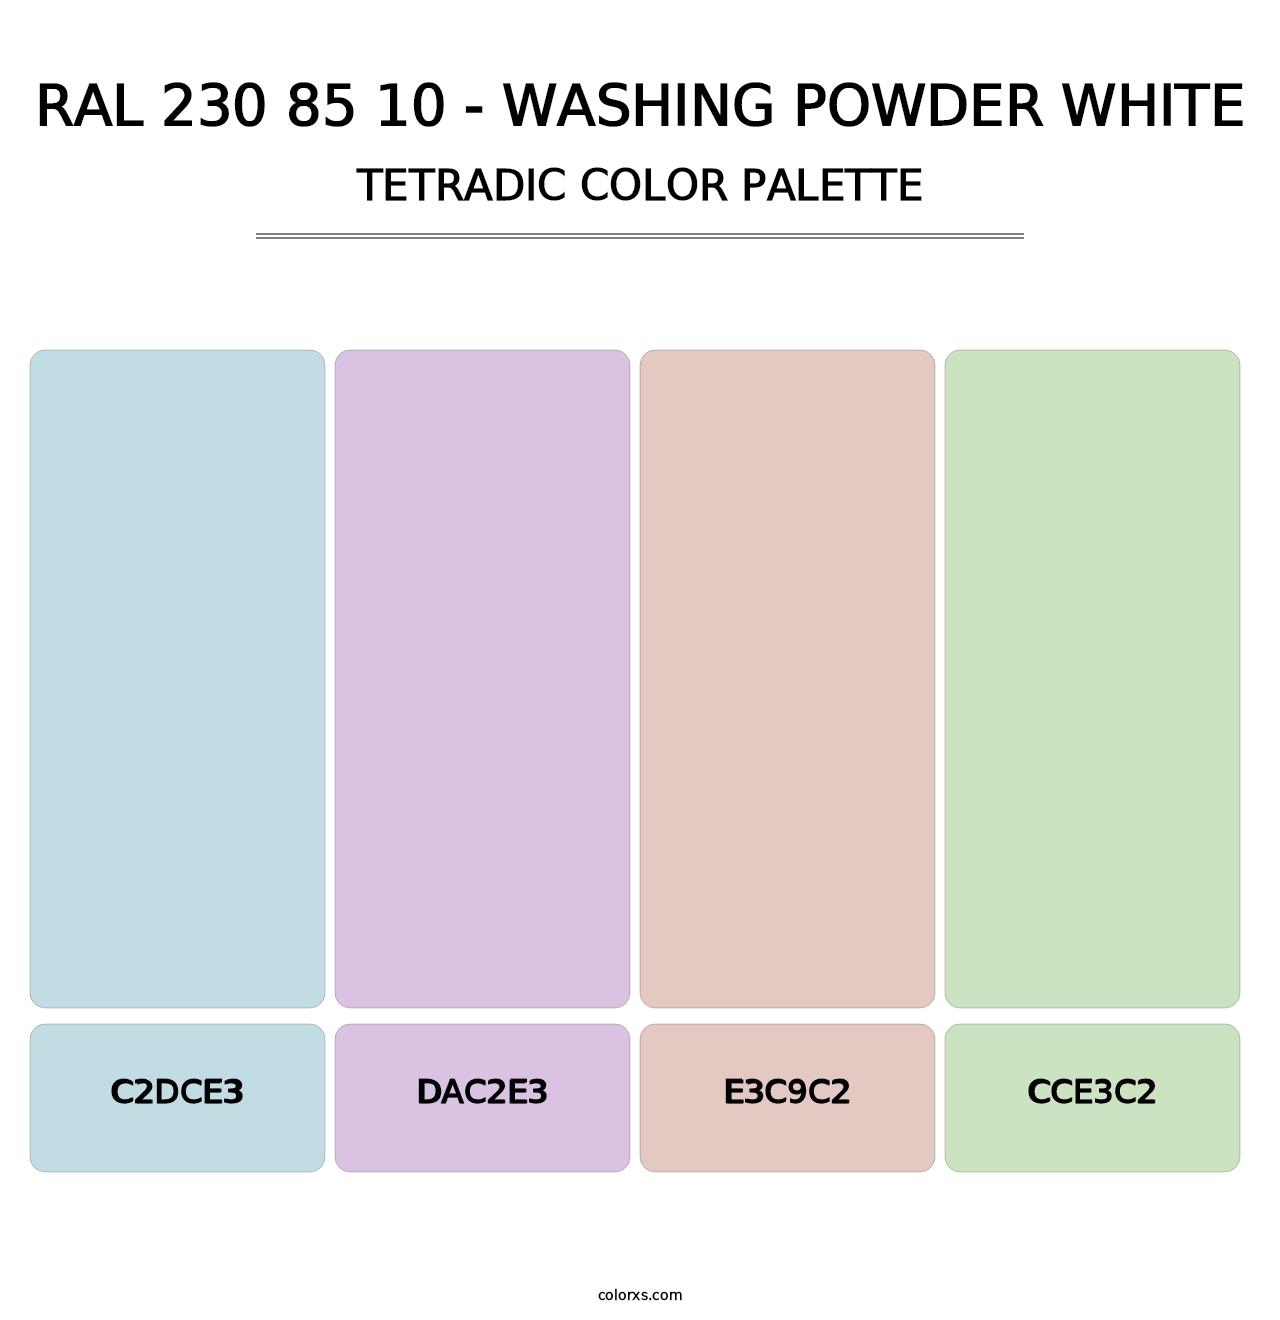 RAL 230 85 10 - Washing Powder White - Tetradic Color Palette